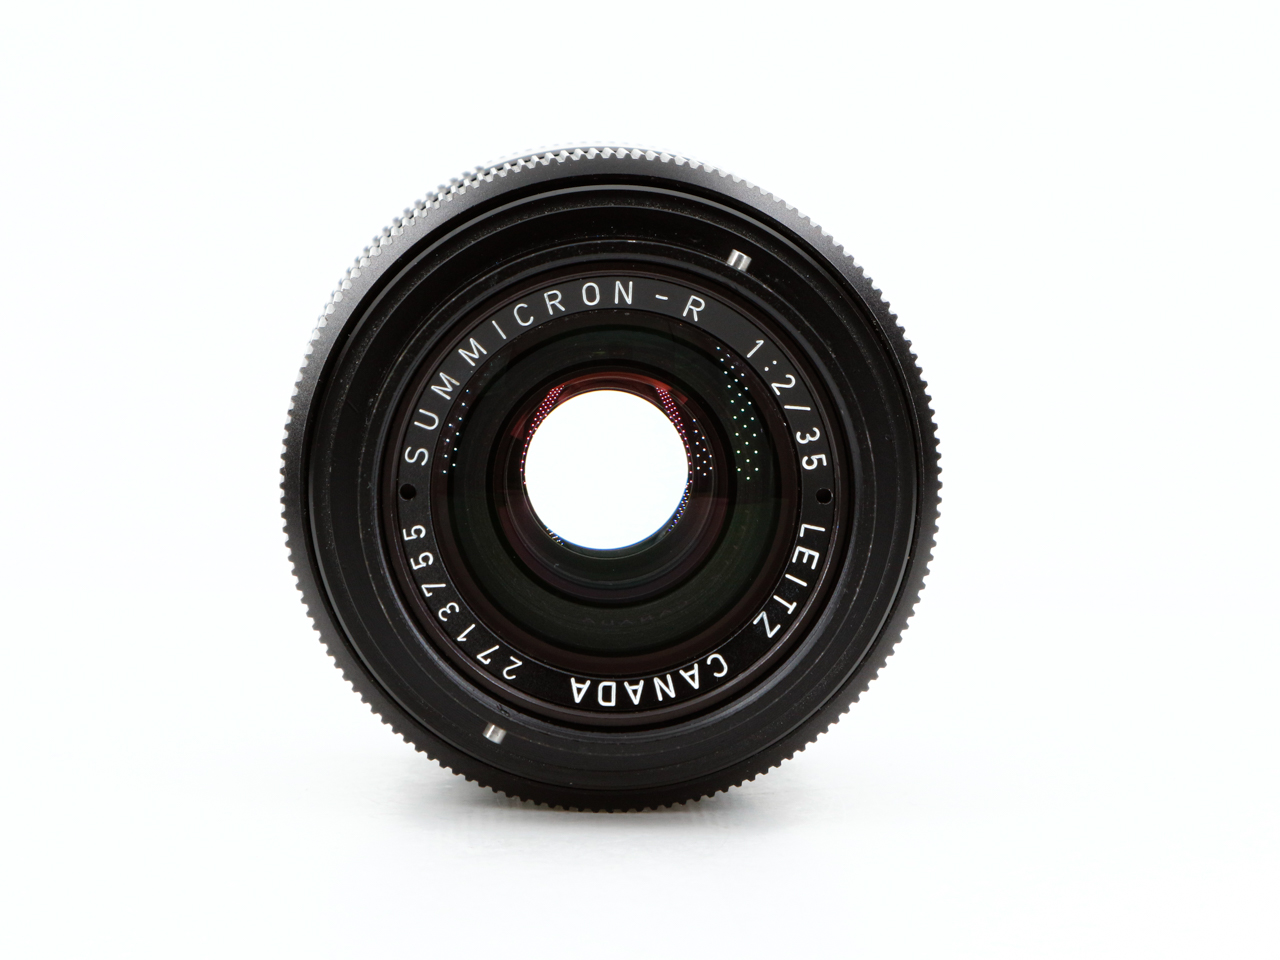 LEICA Summicron-R 2.0/35mm schwarz 3CAM